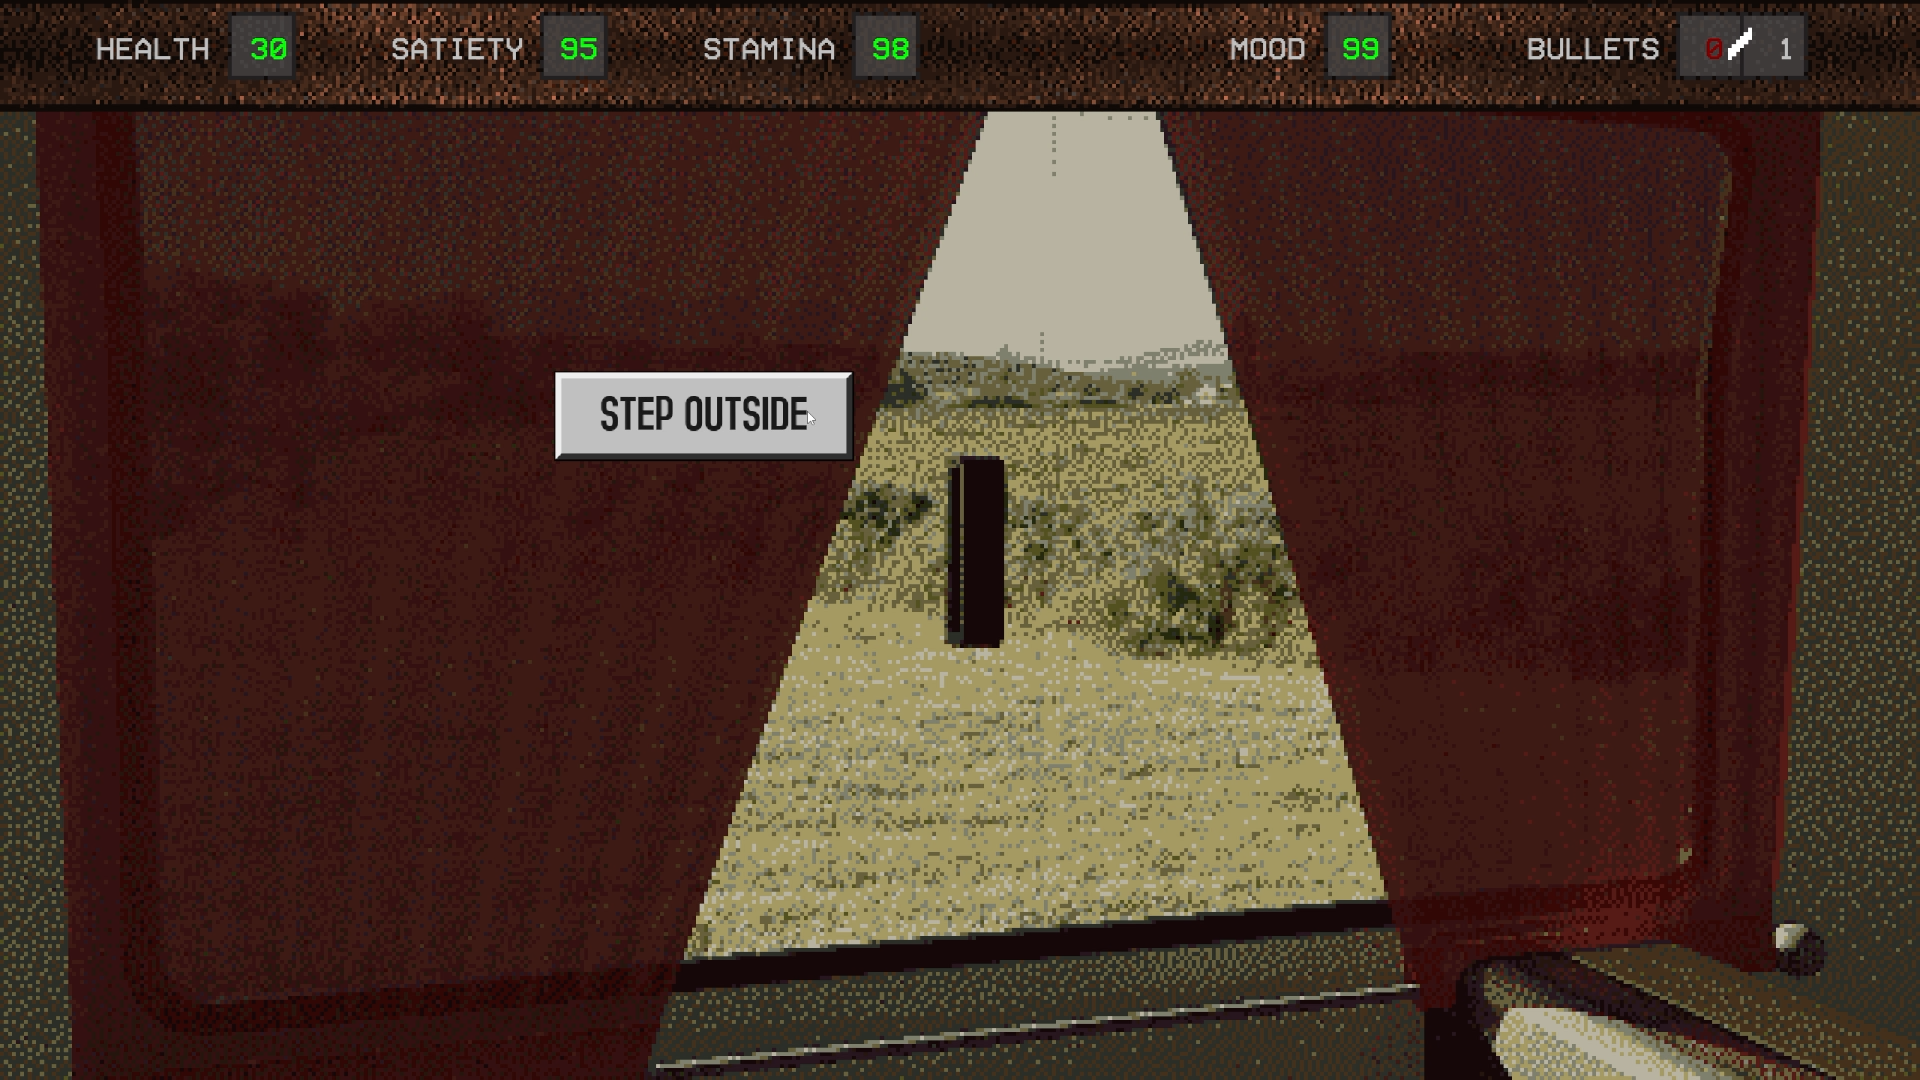 gameplay screenshot - looking outside of RV window